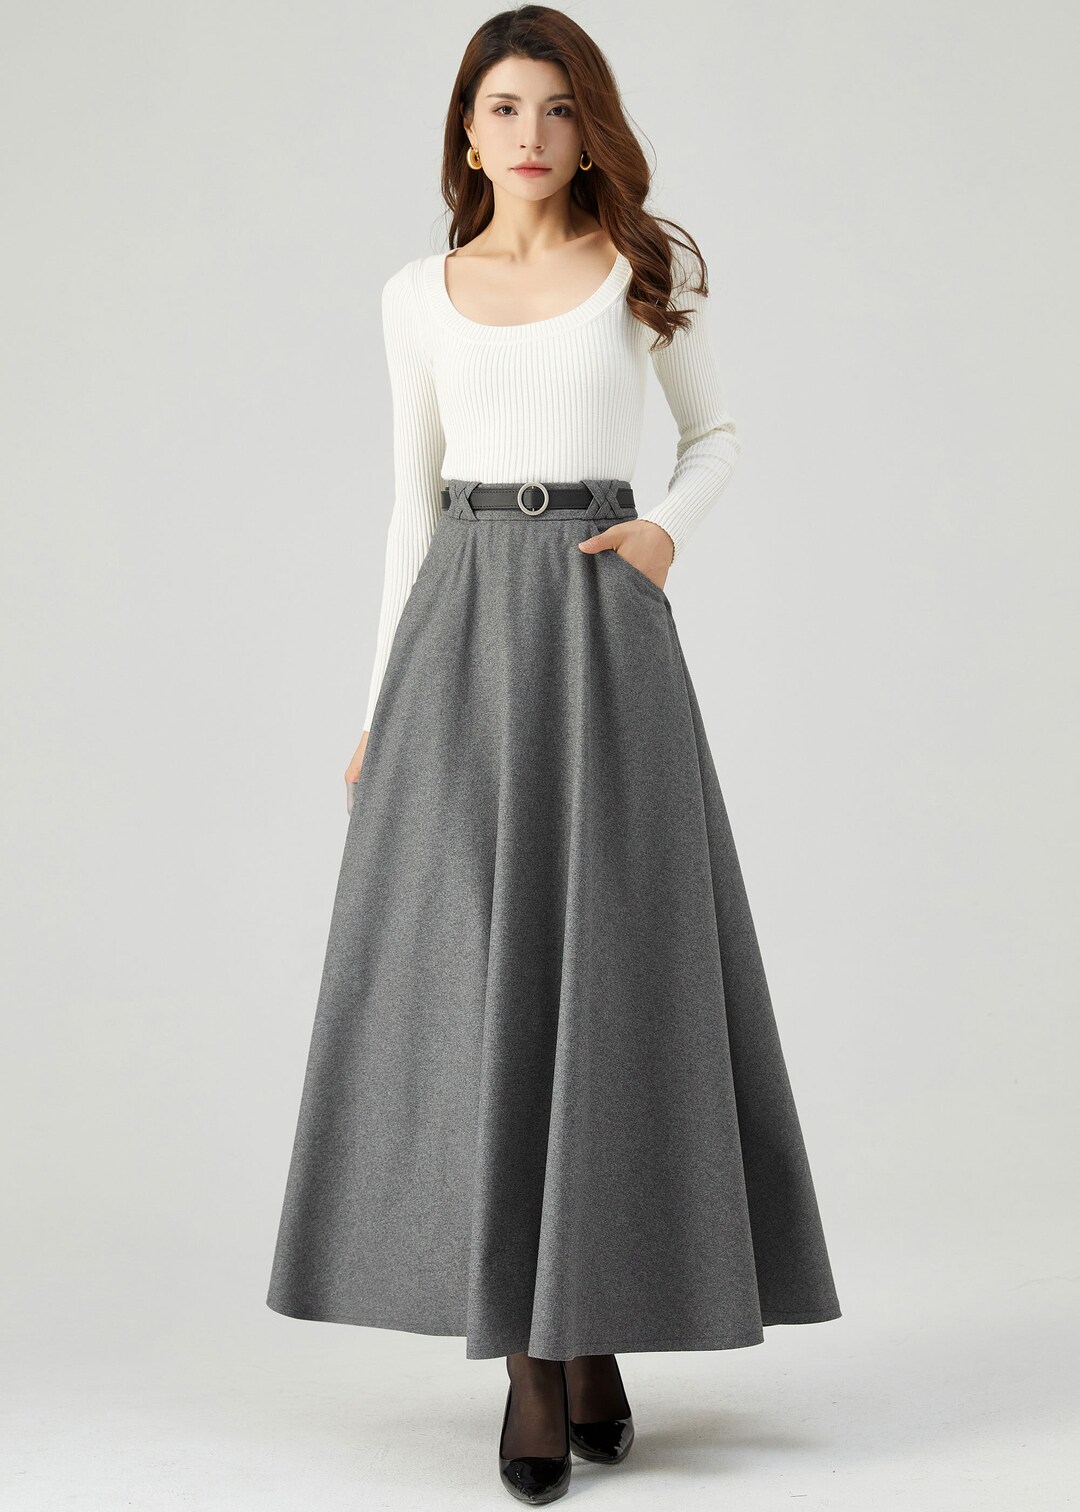 Long Wool Skirt, Gray Wool Skirt, Warm Winter Skirt, Classic Skirt ...